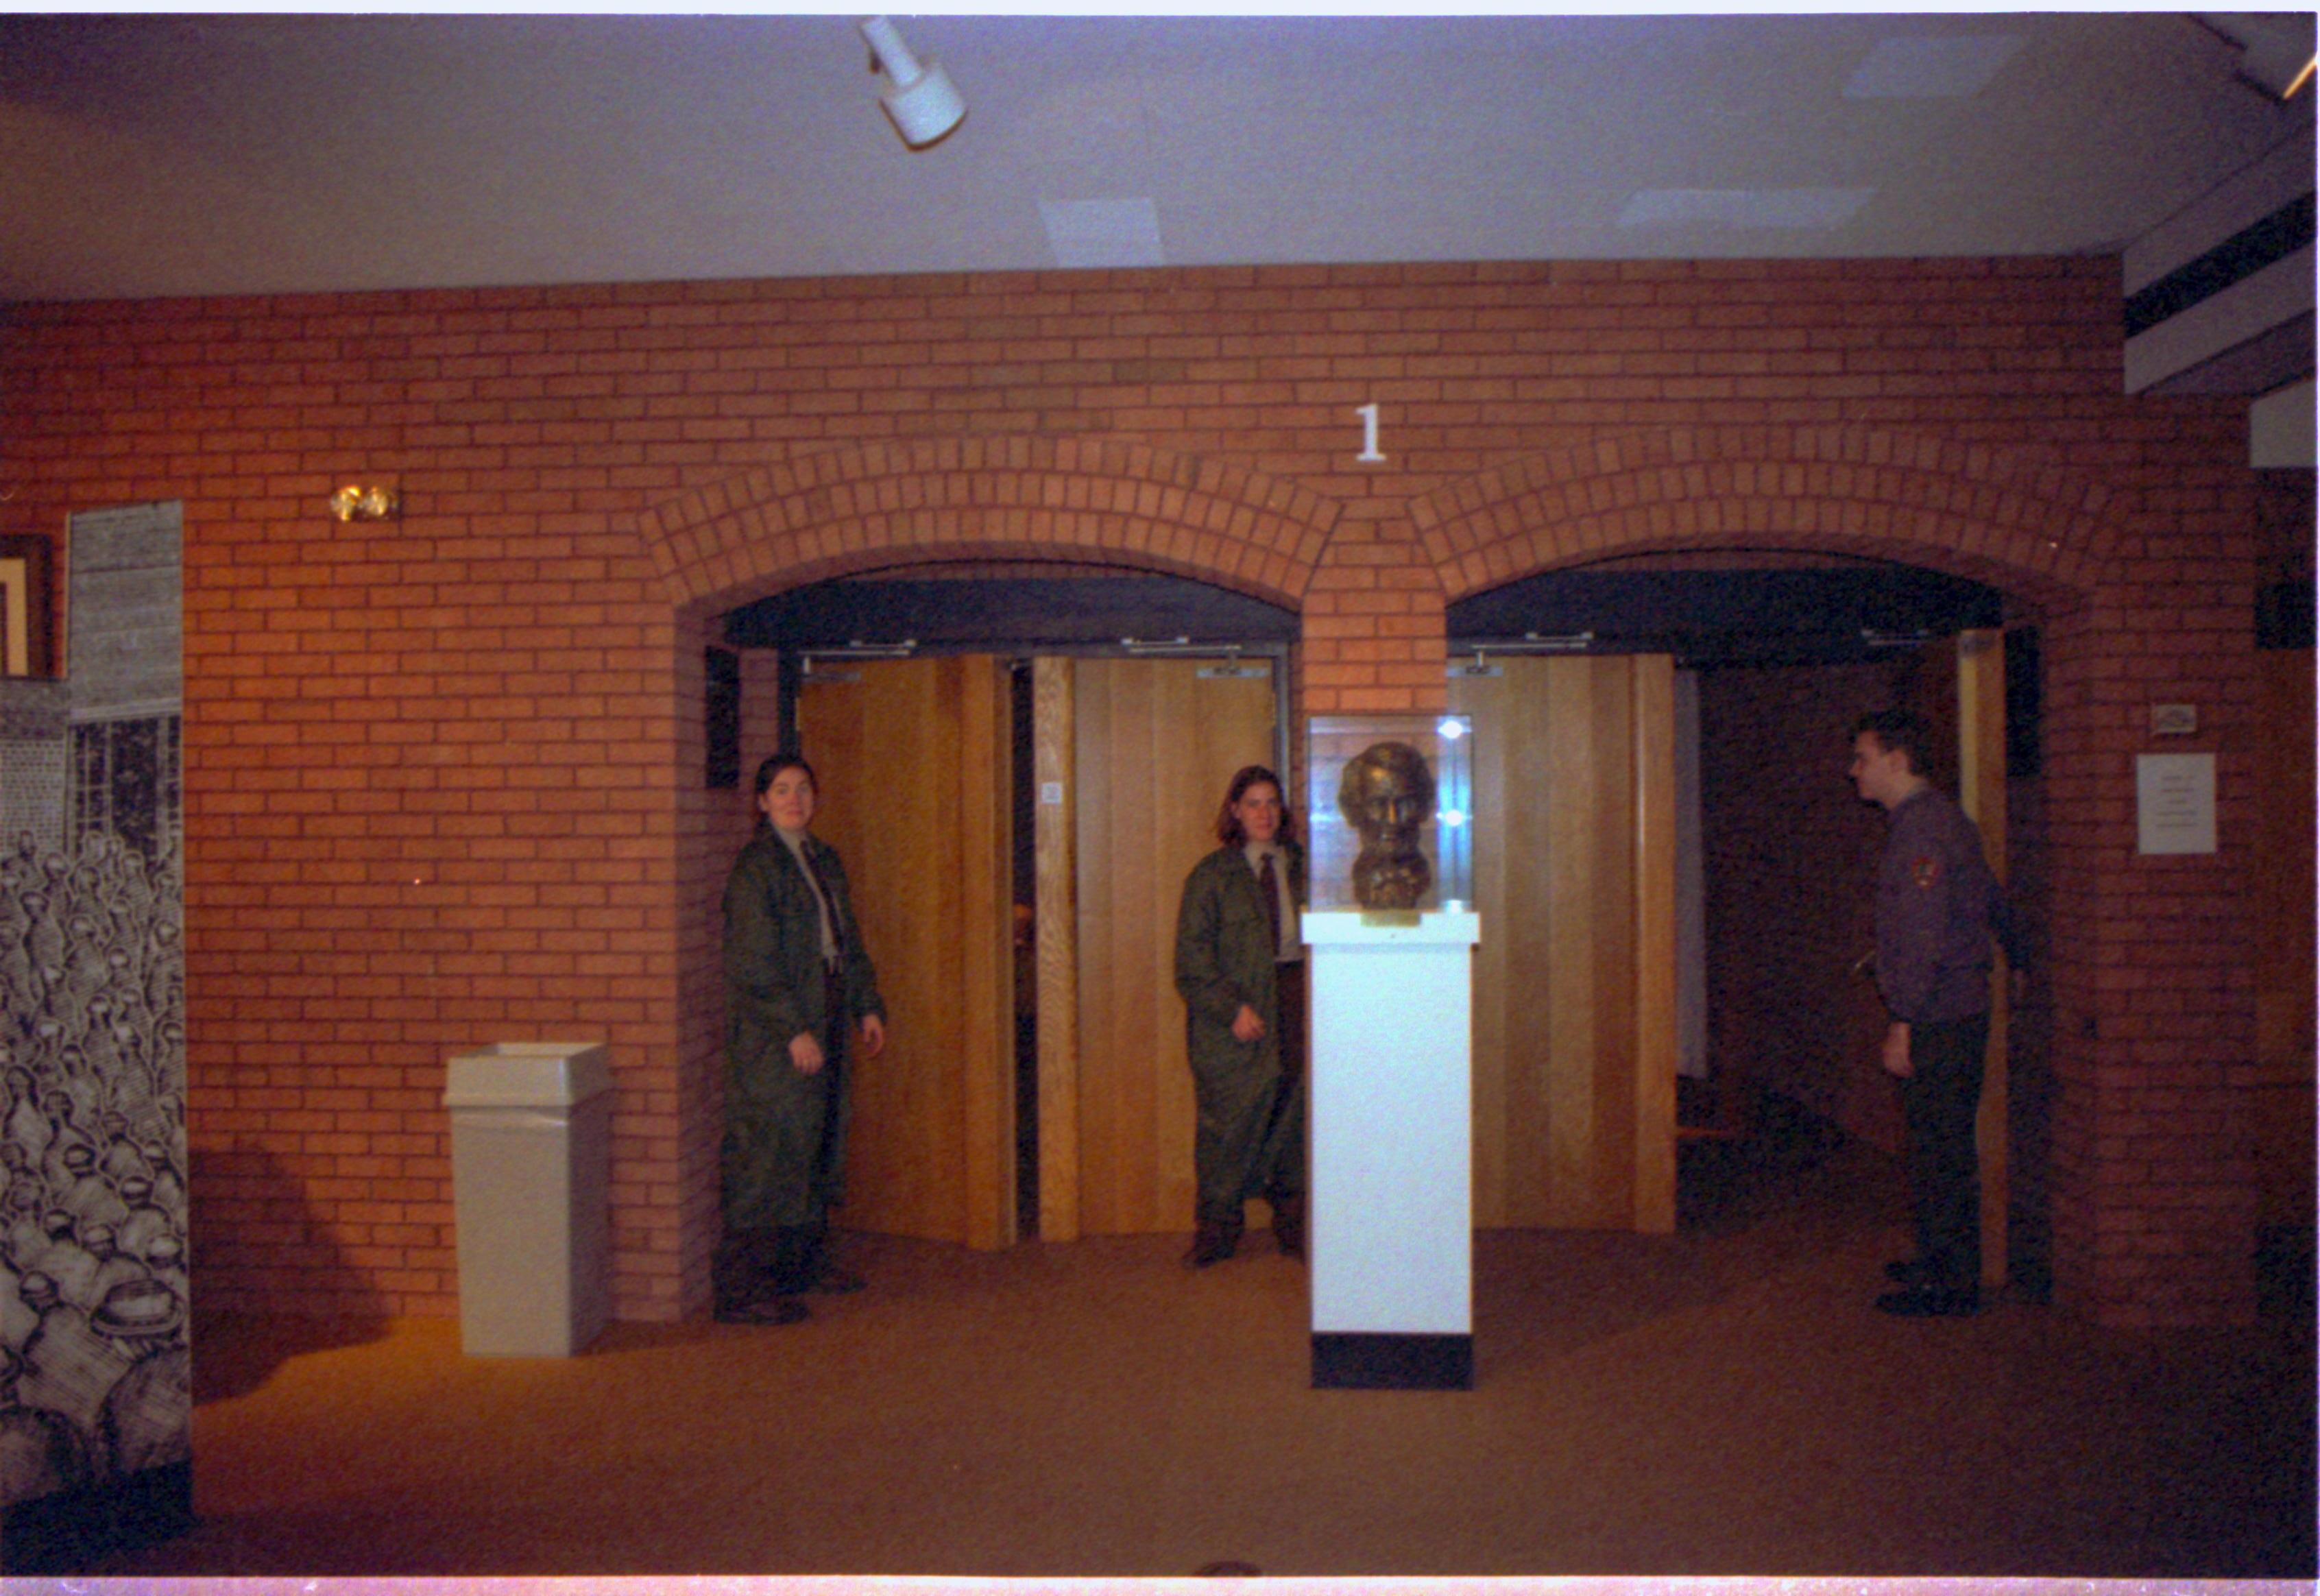 Rangers standing at Theater I doors. 2-1997 Colloq (color); 17 Colloquium, 1997